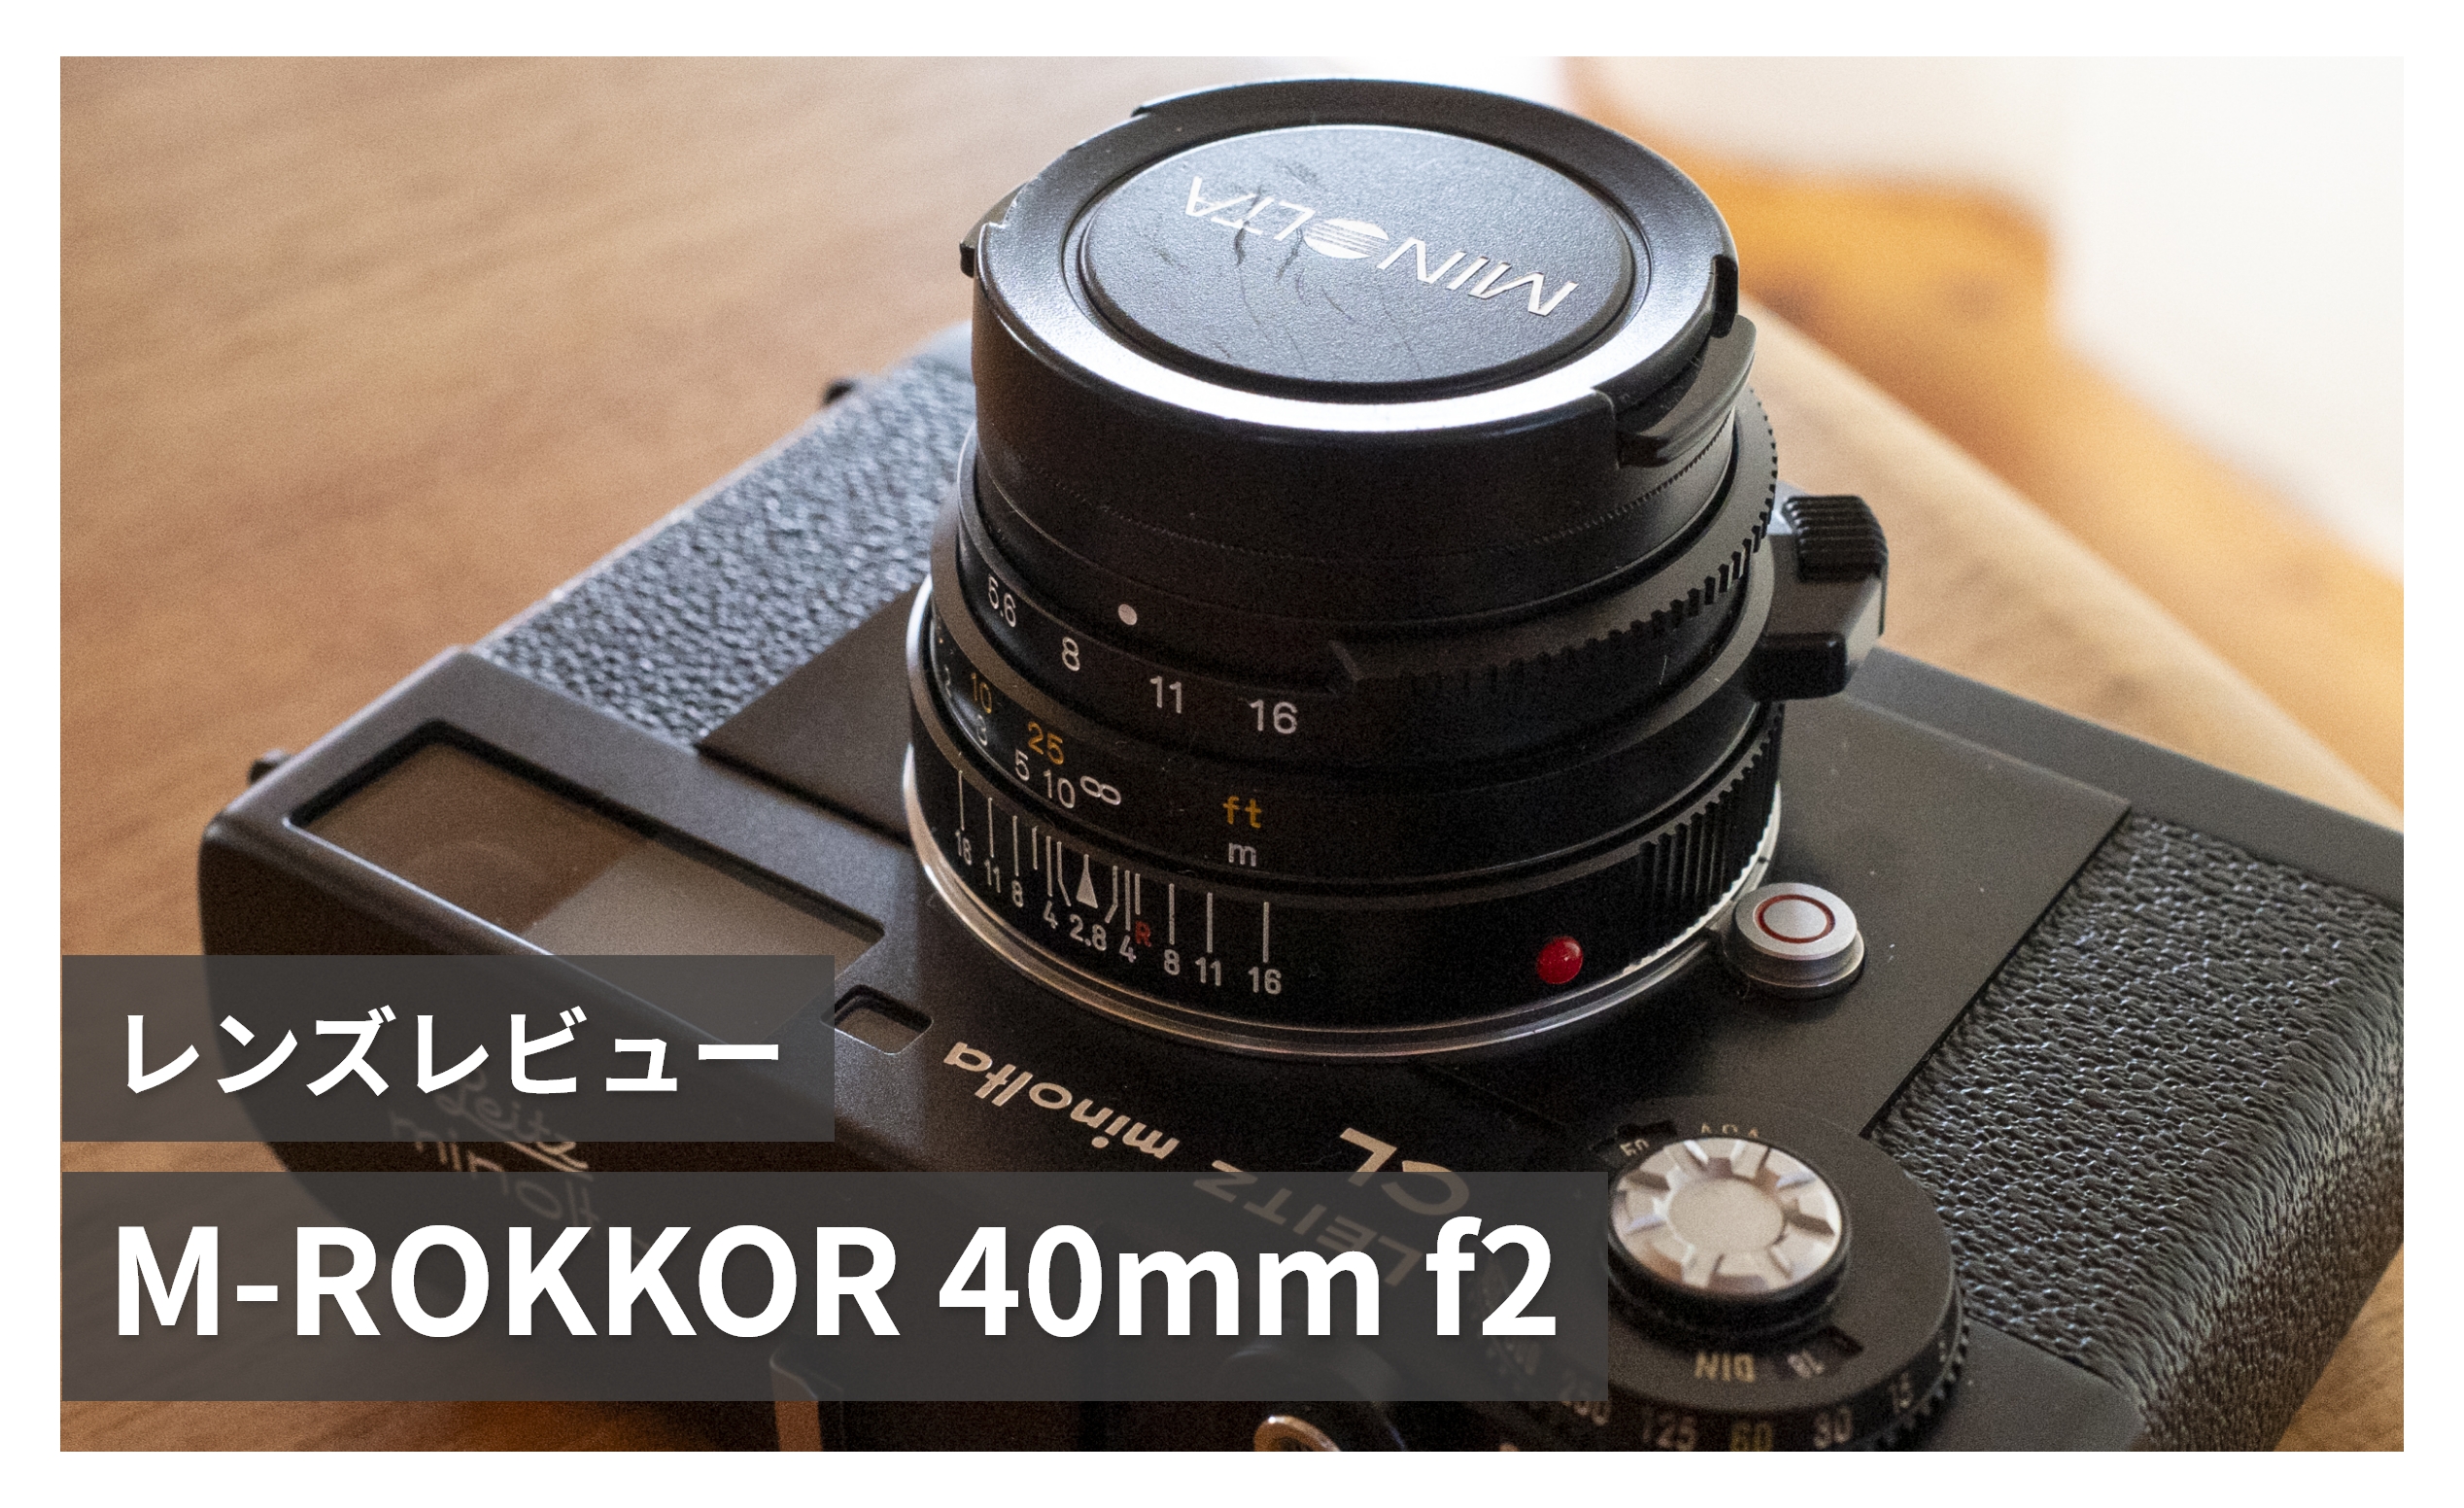 M-ROKKOR 40mm f2